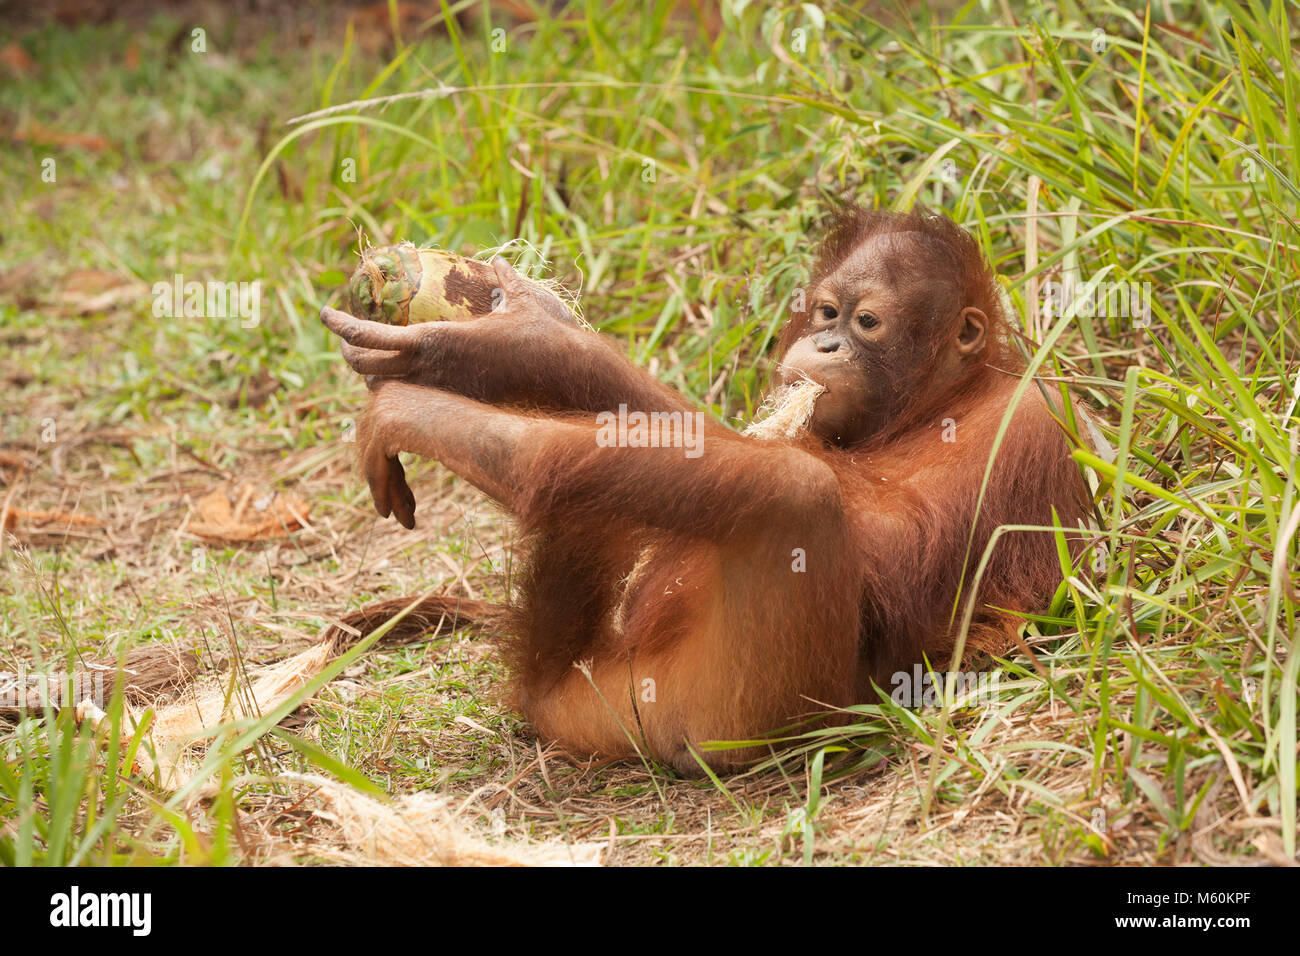 Junge waise Orang-utan spielen mit Kokosnuss im Freien exploration Session in der Orang-utan-Care Center (Pongo pygmaeus) Stockfoto